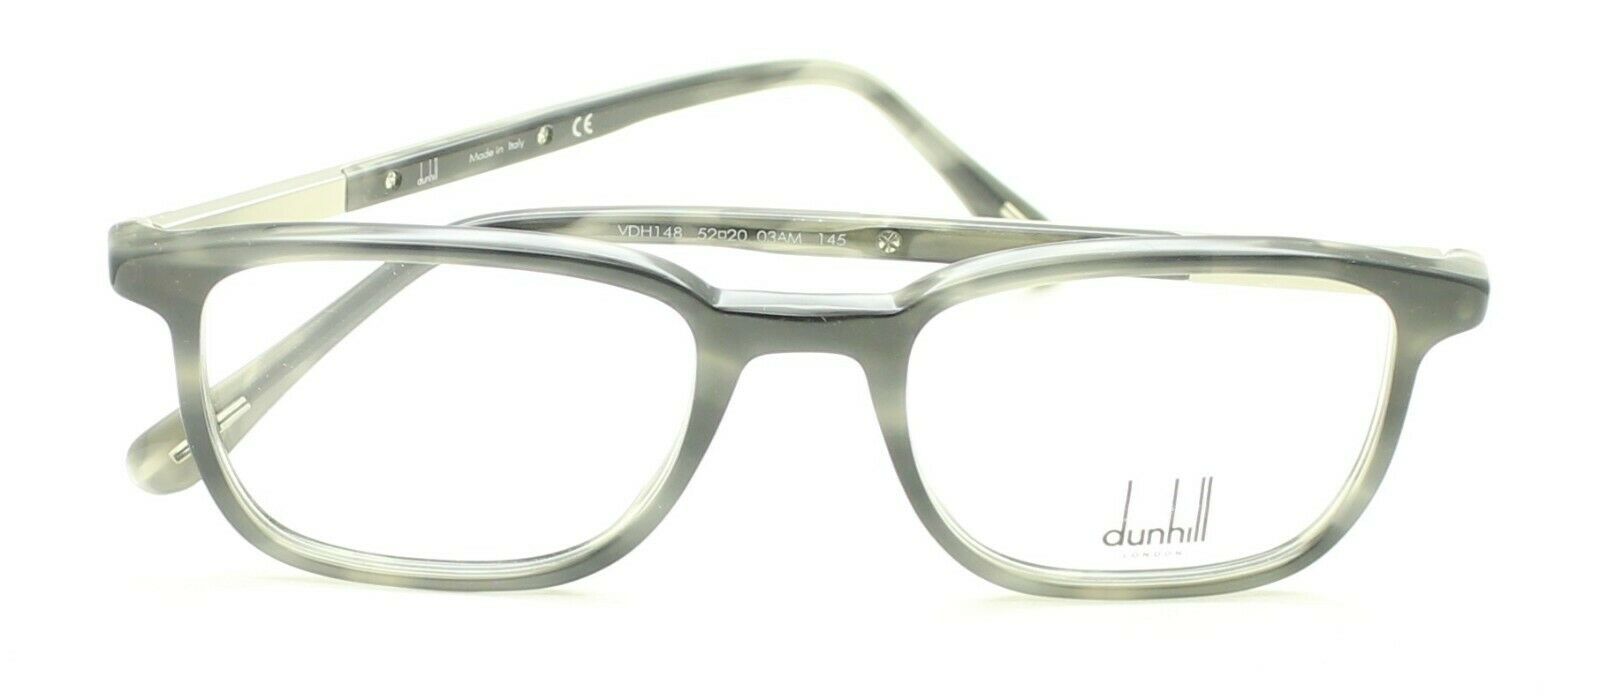 DUNHILL LONDON VDH148 03AM Eyewear FRAMES RX Optical Eyeglasses Glasses - Italy